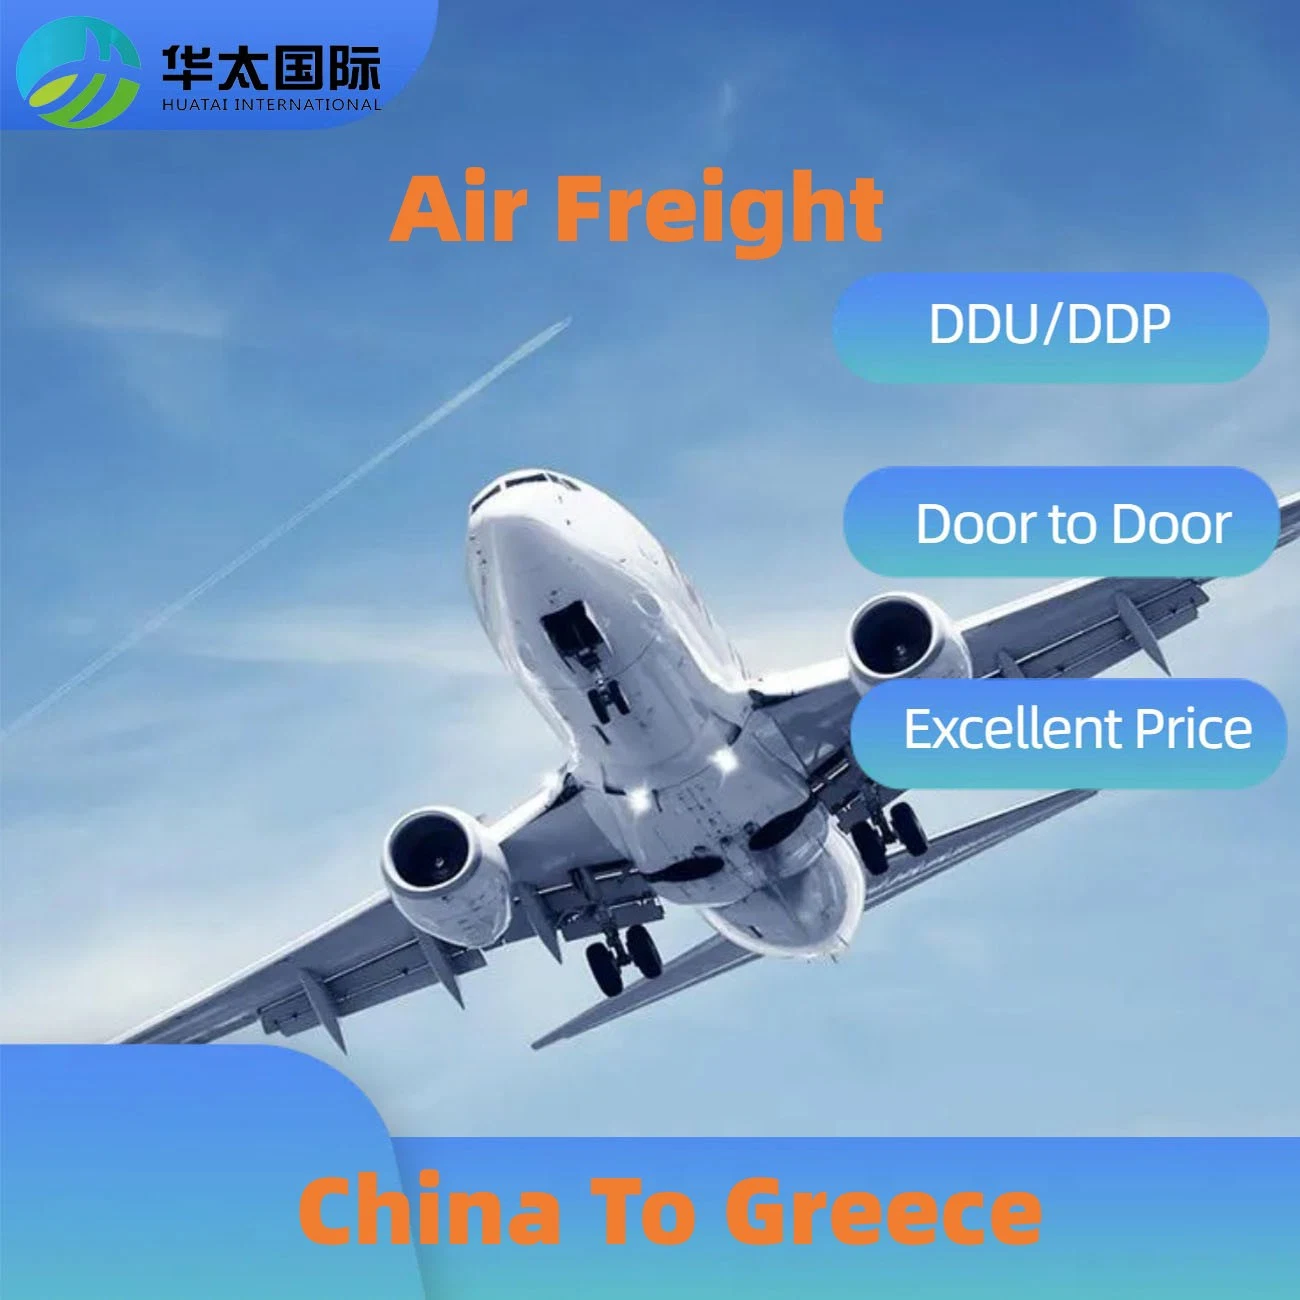 Transporte aéreo desde China a Grecia Logística Internacional puerta DDU/DDP A la puerta